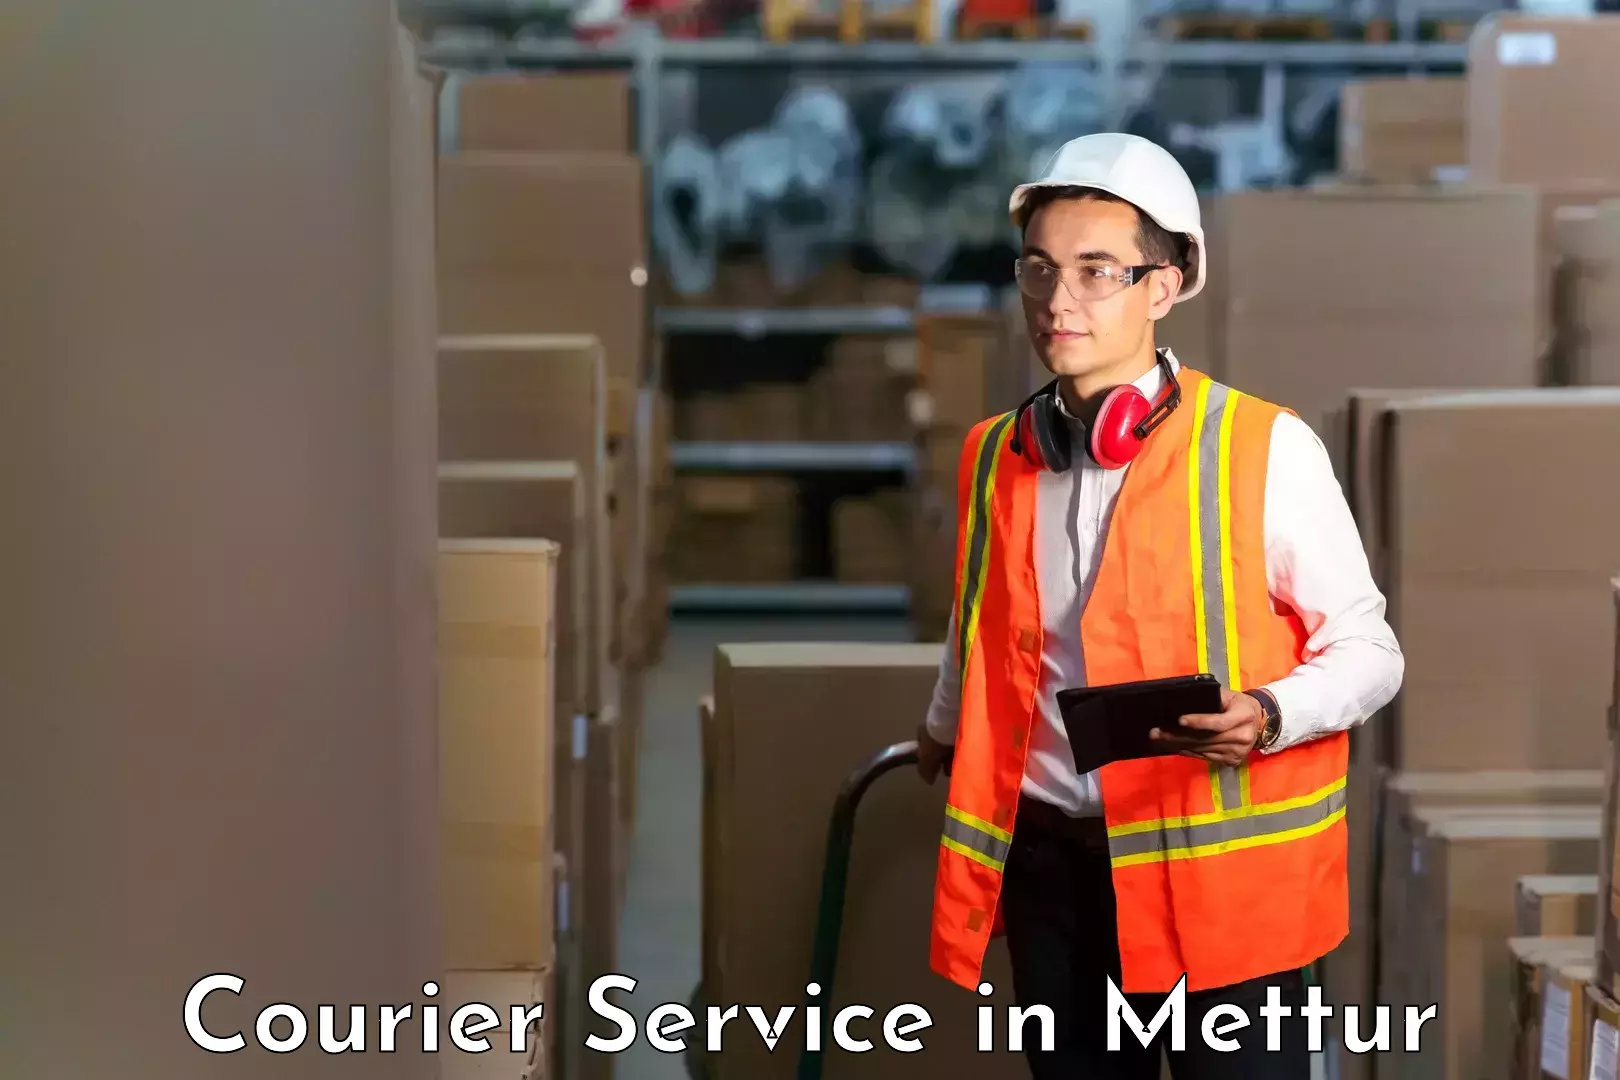 Courier service efficiency in Mettur